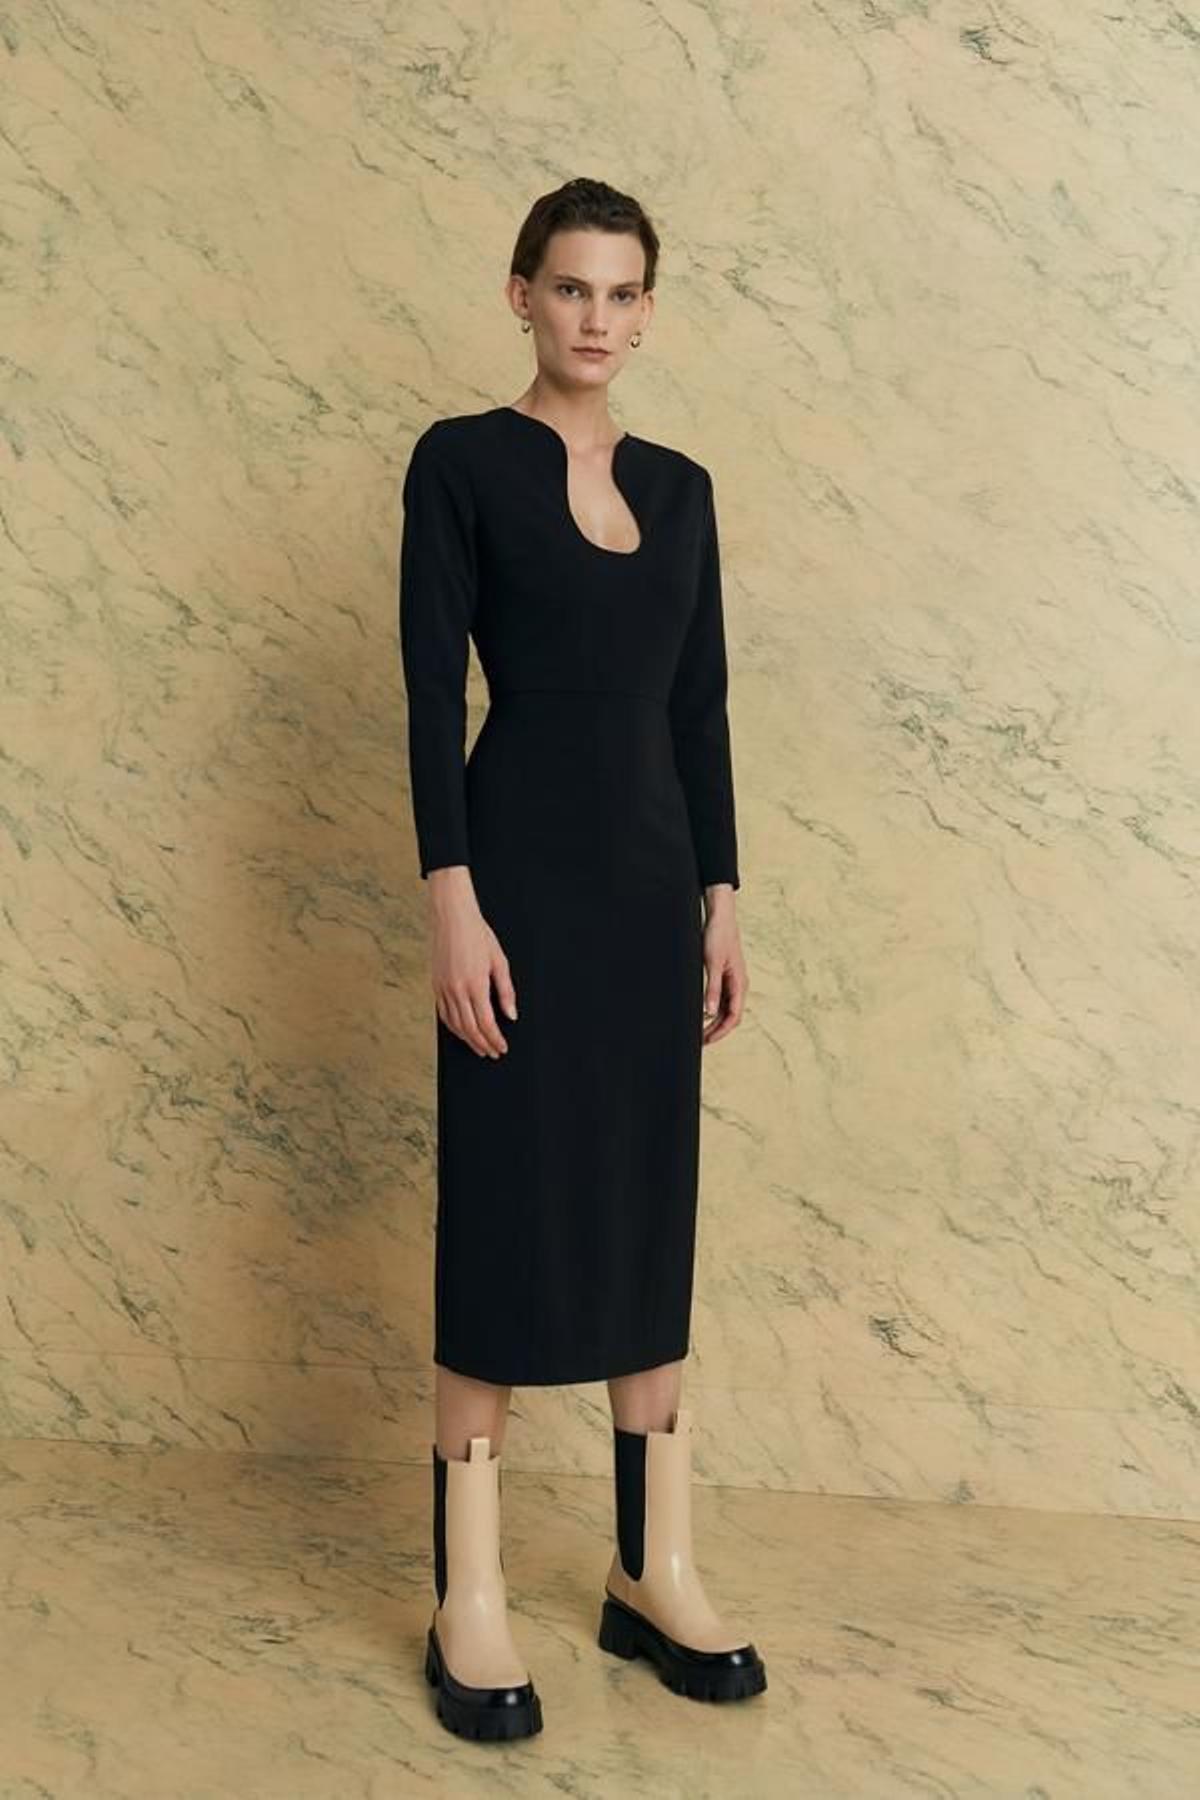 Vestido negro con escote redondo, Rebajado de 39,99 a 19,99 euros.